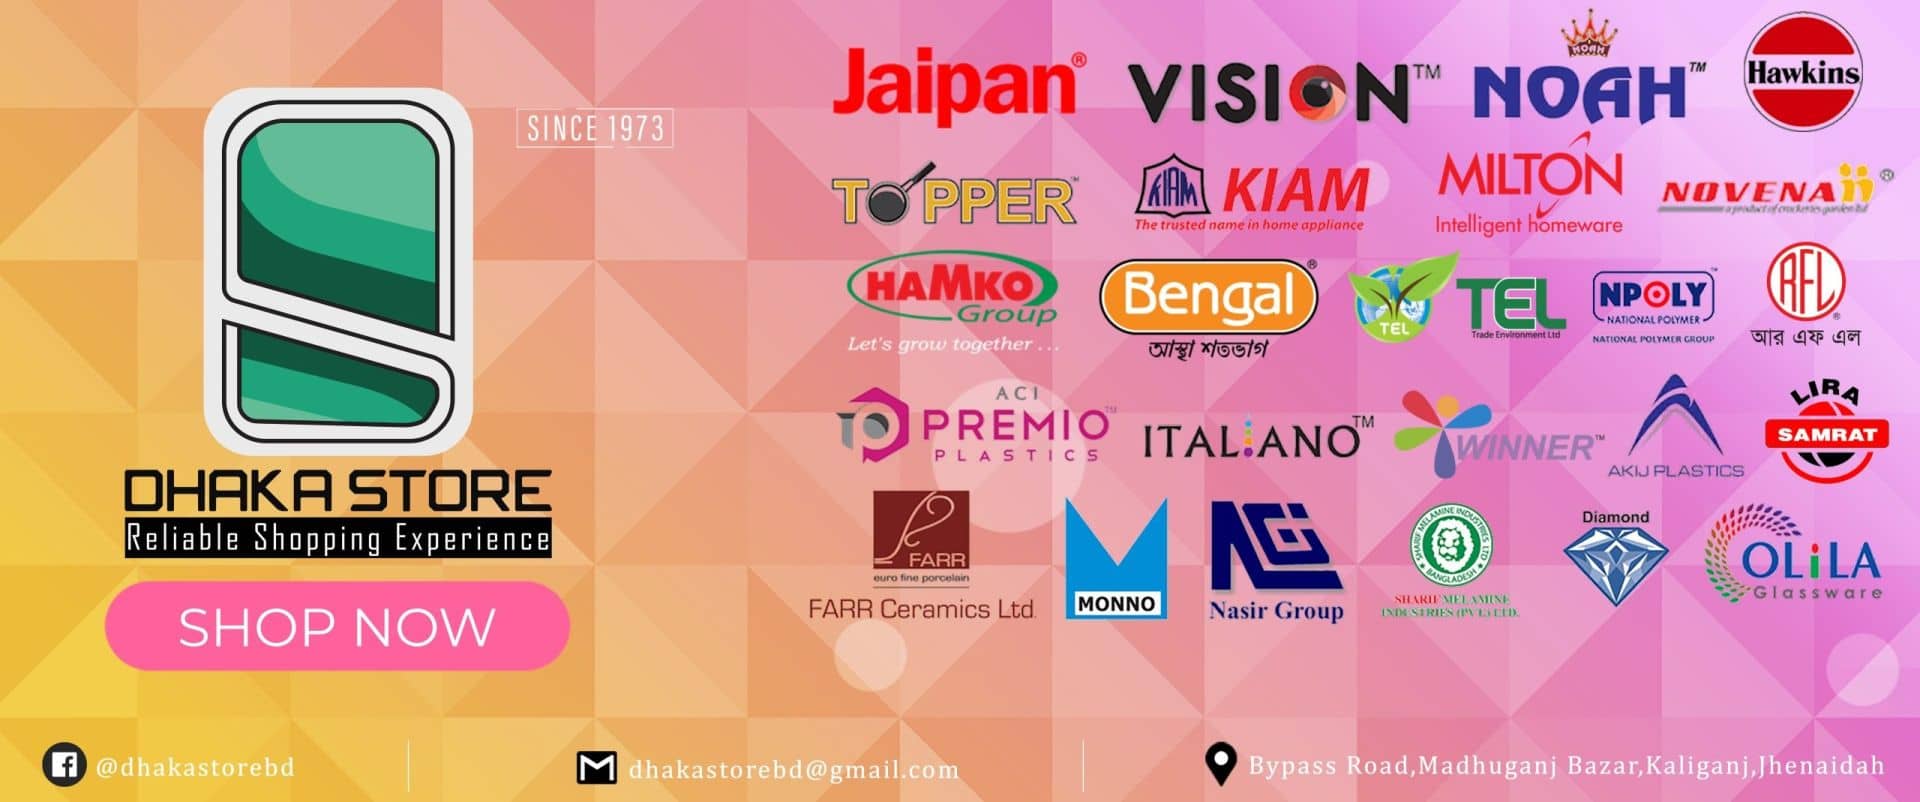 Dhaka Store,Brand,Jaipan,Vision,RFL Plastic,Olila,Nasir,Glassware,Sharif,Italiano,Melamineware,Monno,Ceramic